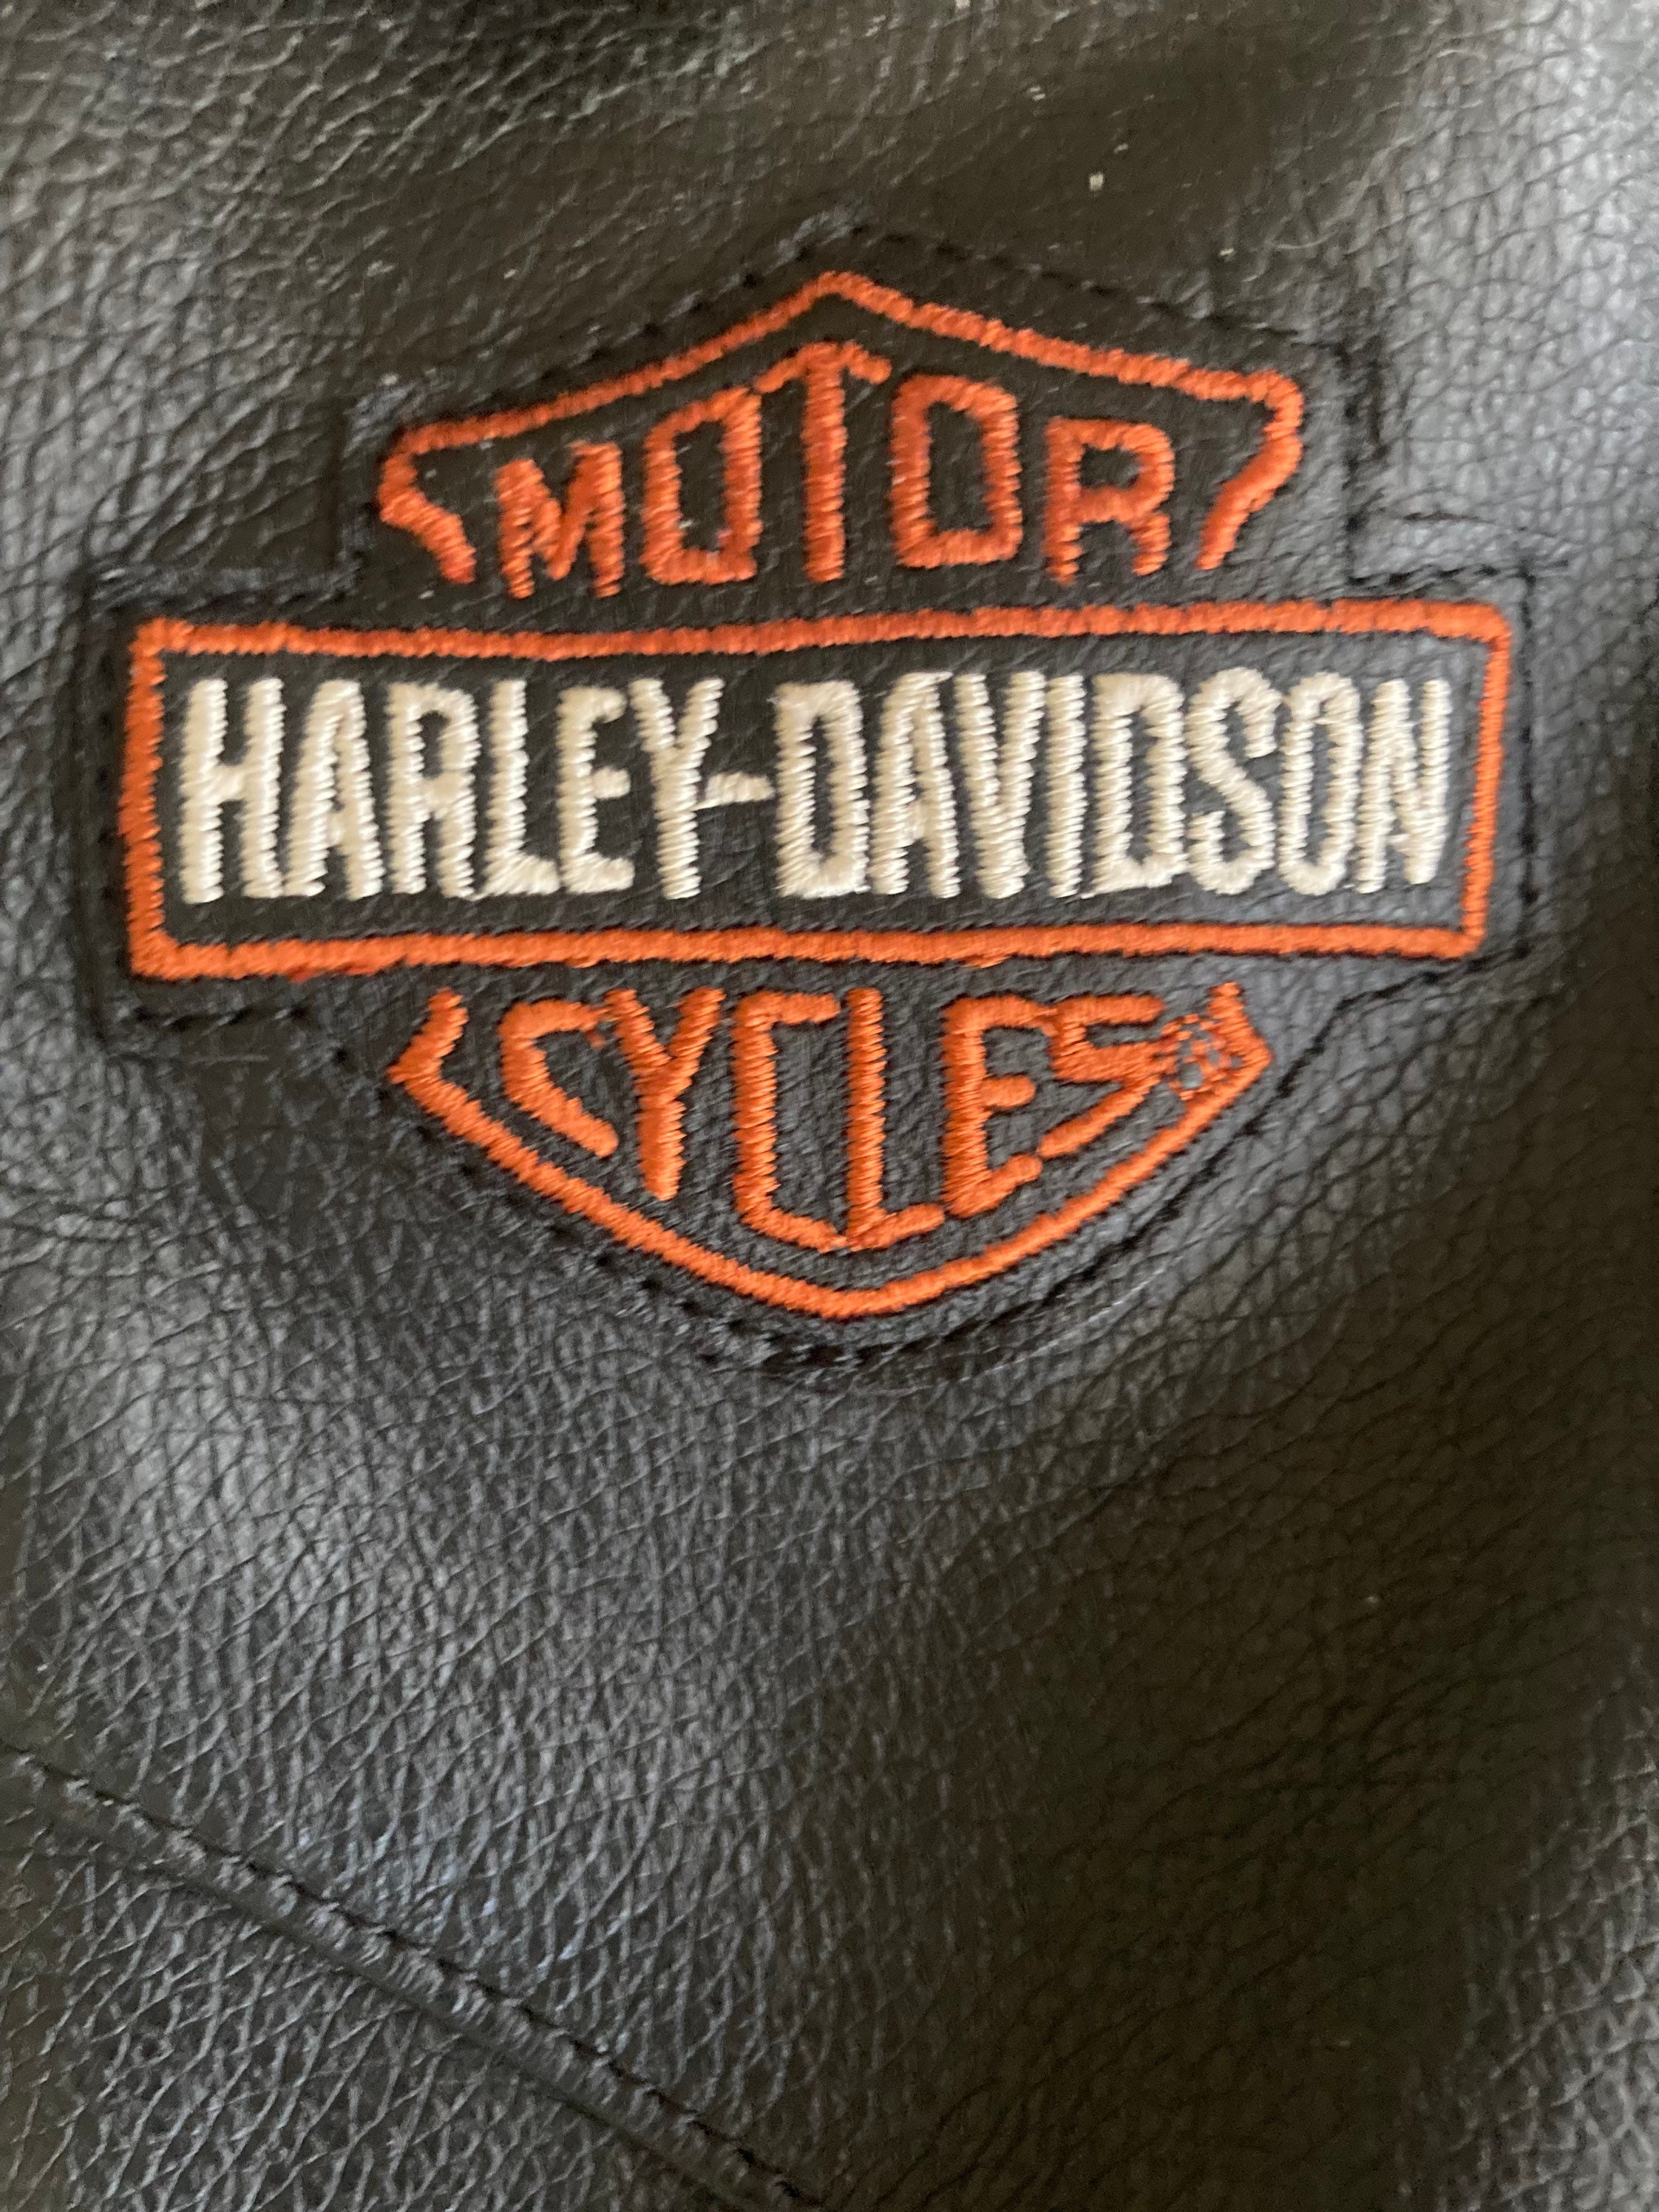 Harley Davidson leather chaps - ayanawebzine.com